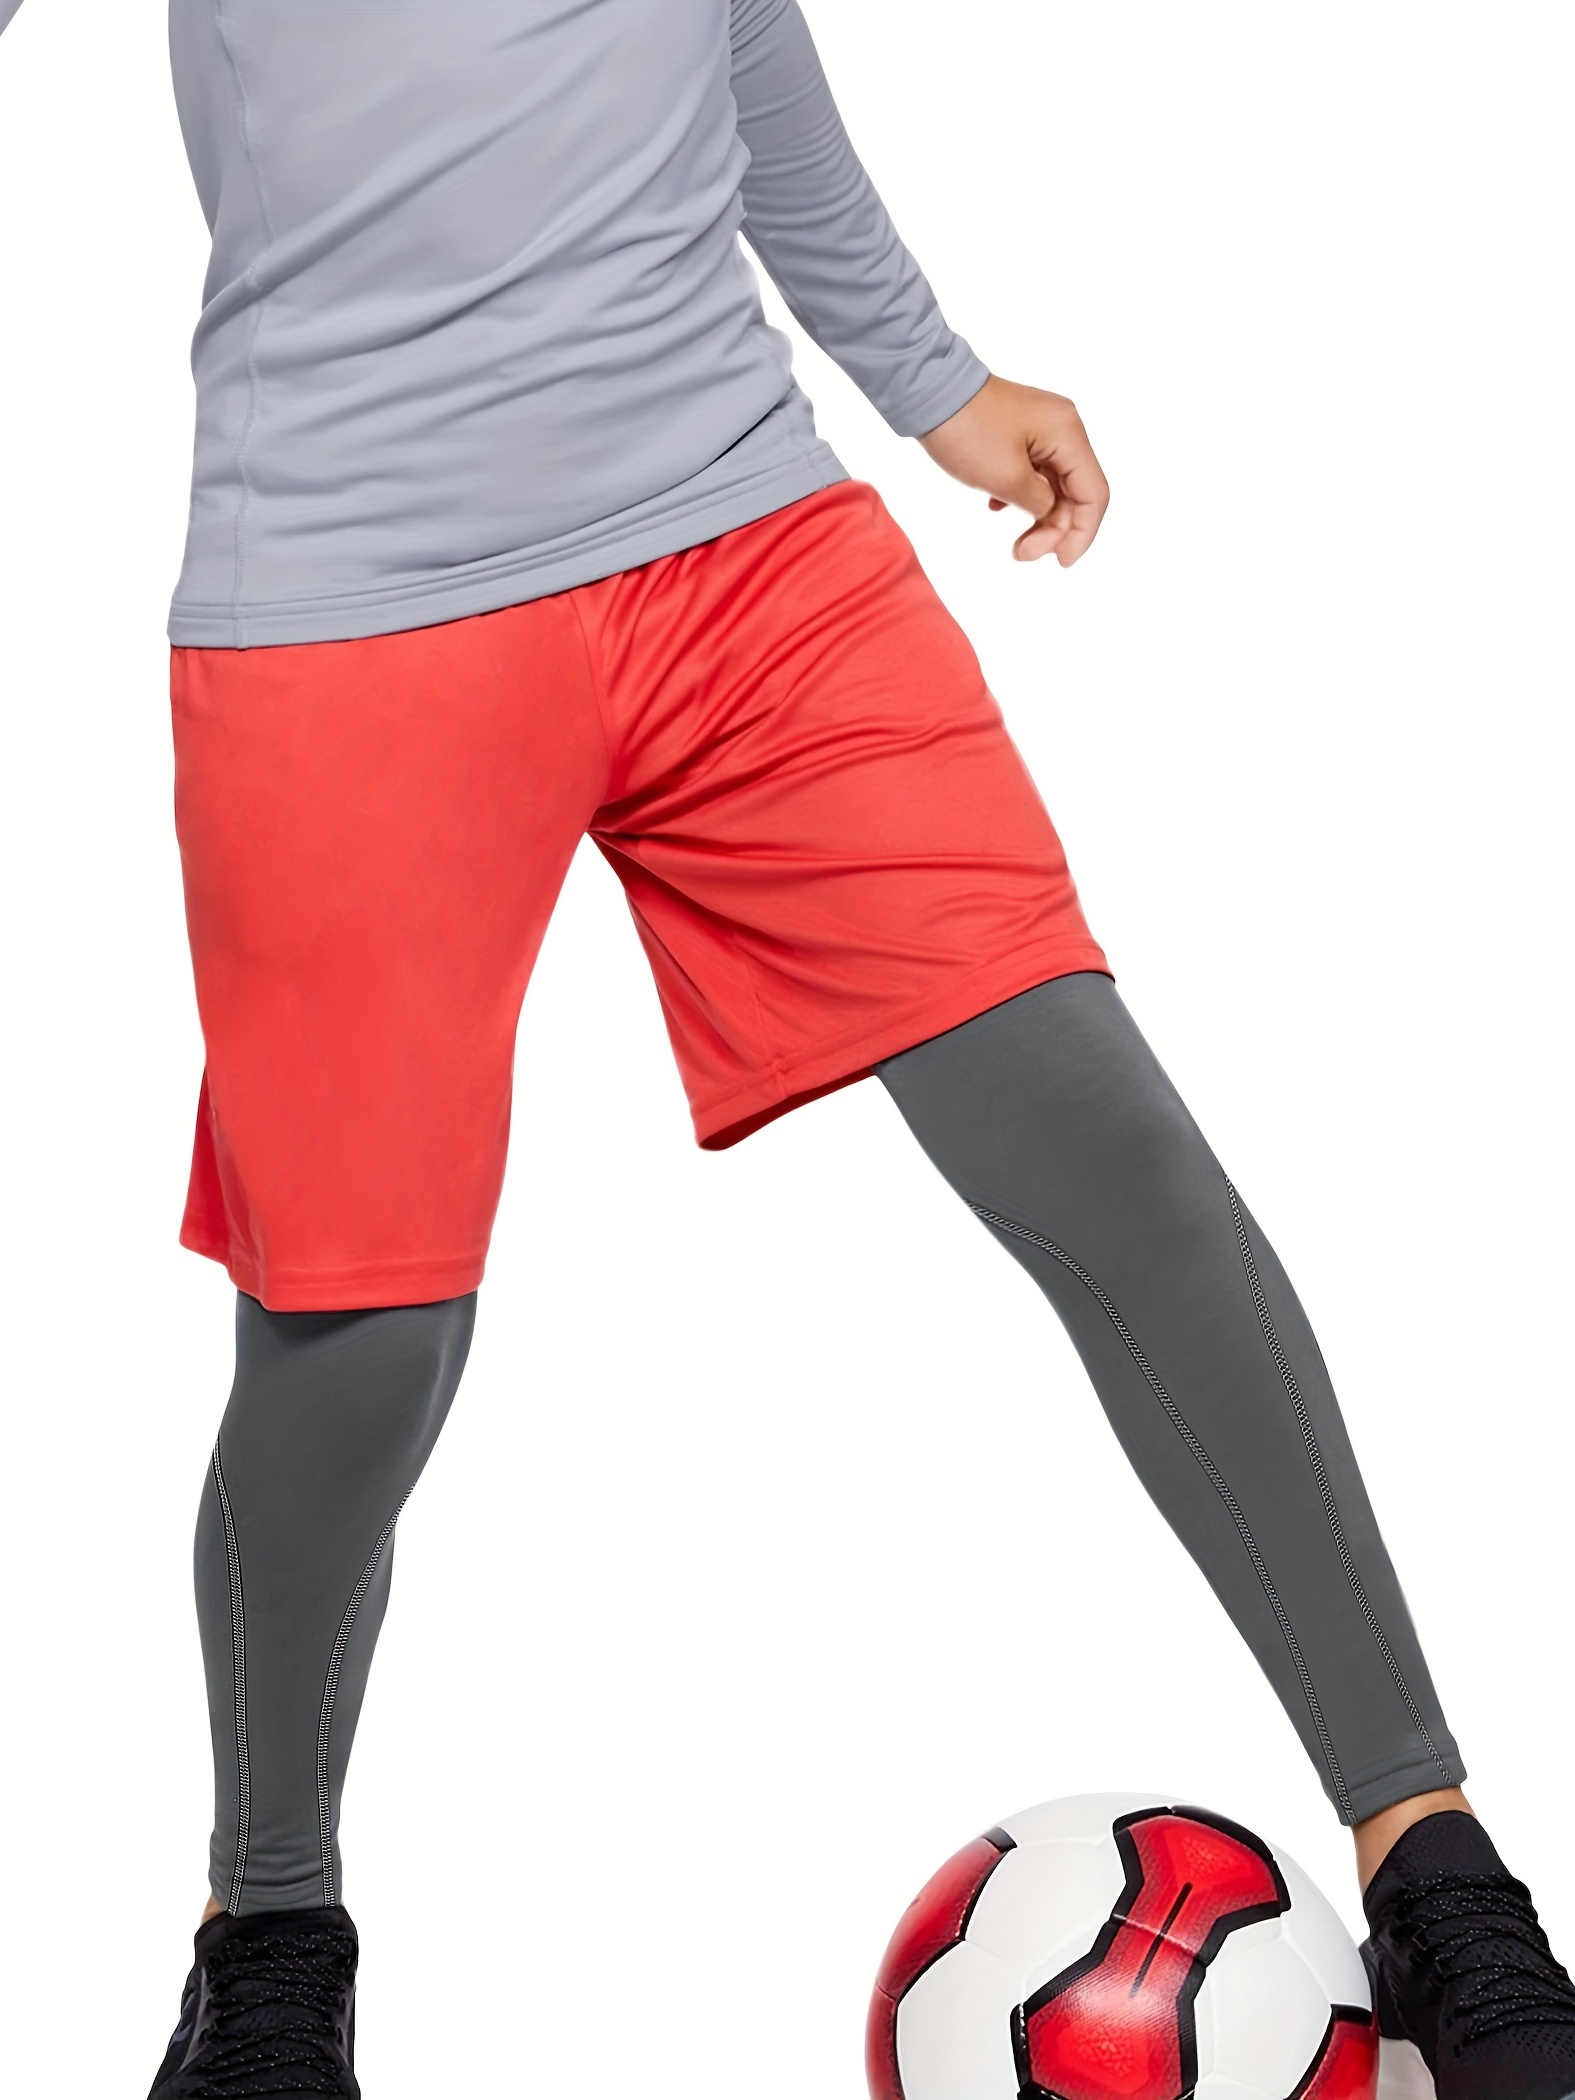 Buy Men's Youth Compression Pants Running Legging Soccer Football